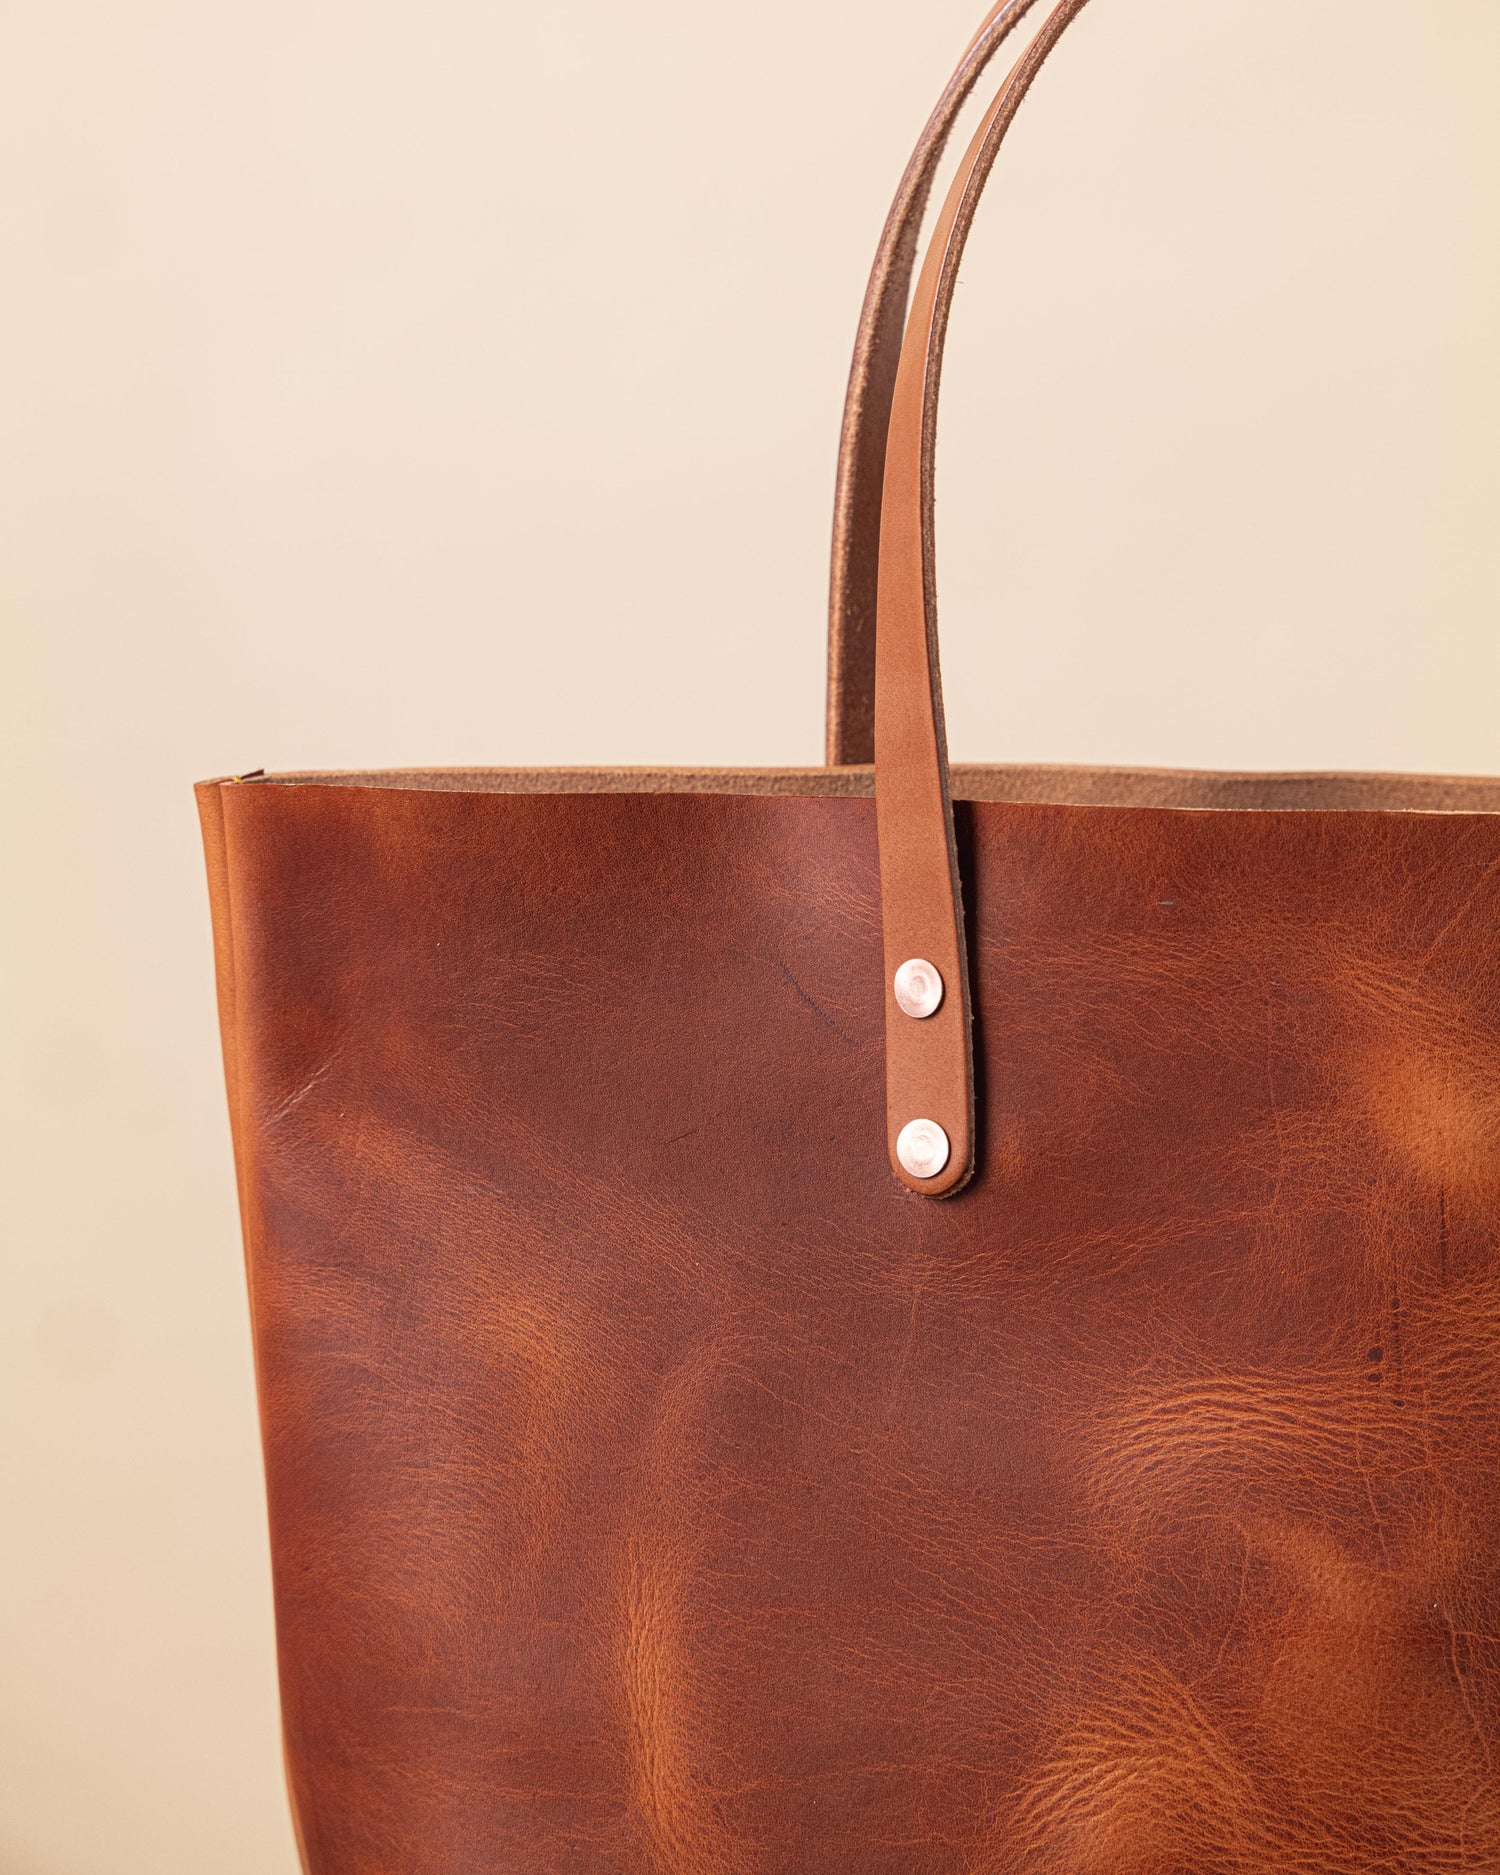 English Tan Dublin East West Tote- brown tote bag handmade in America